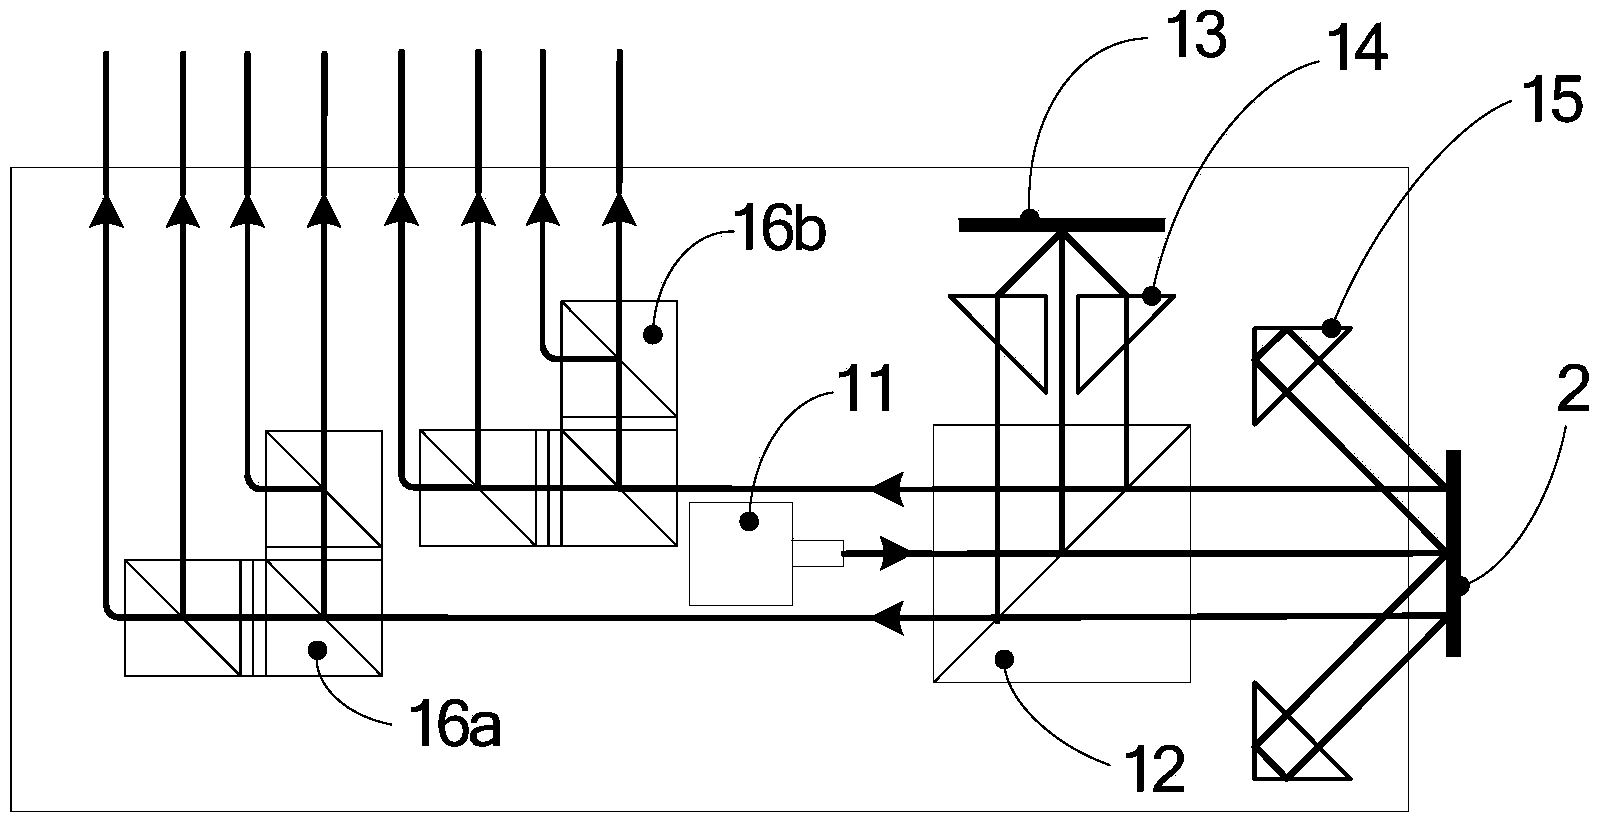 Two-freedom homodyne grating interferometer displacement measuring system based on optical octave method